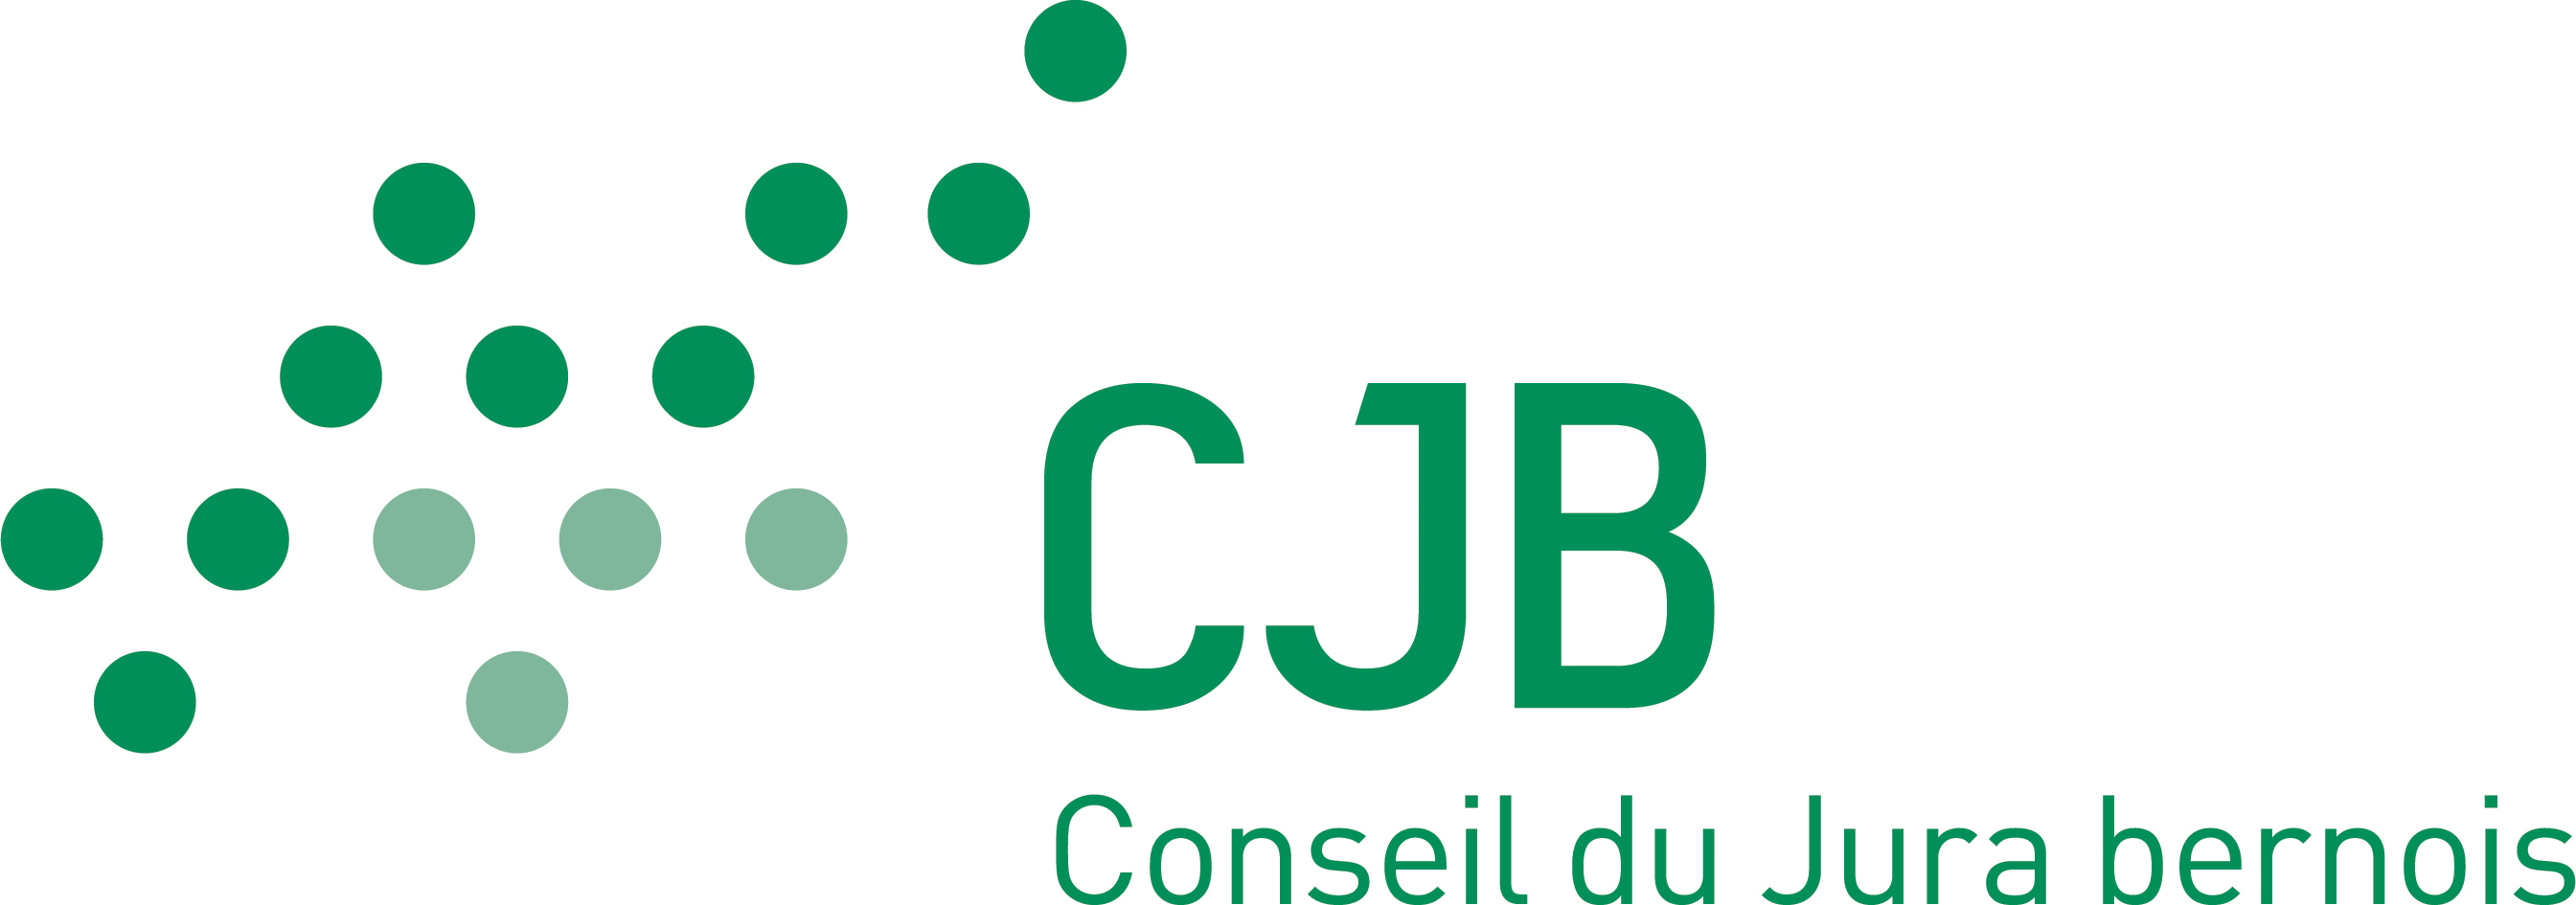 Conseil du Jura bernois CJB logo